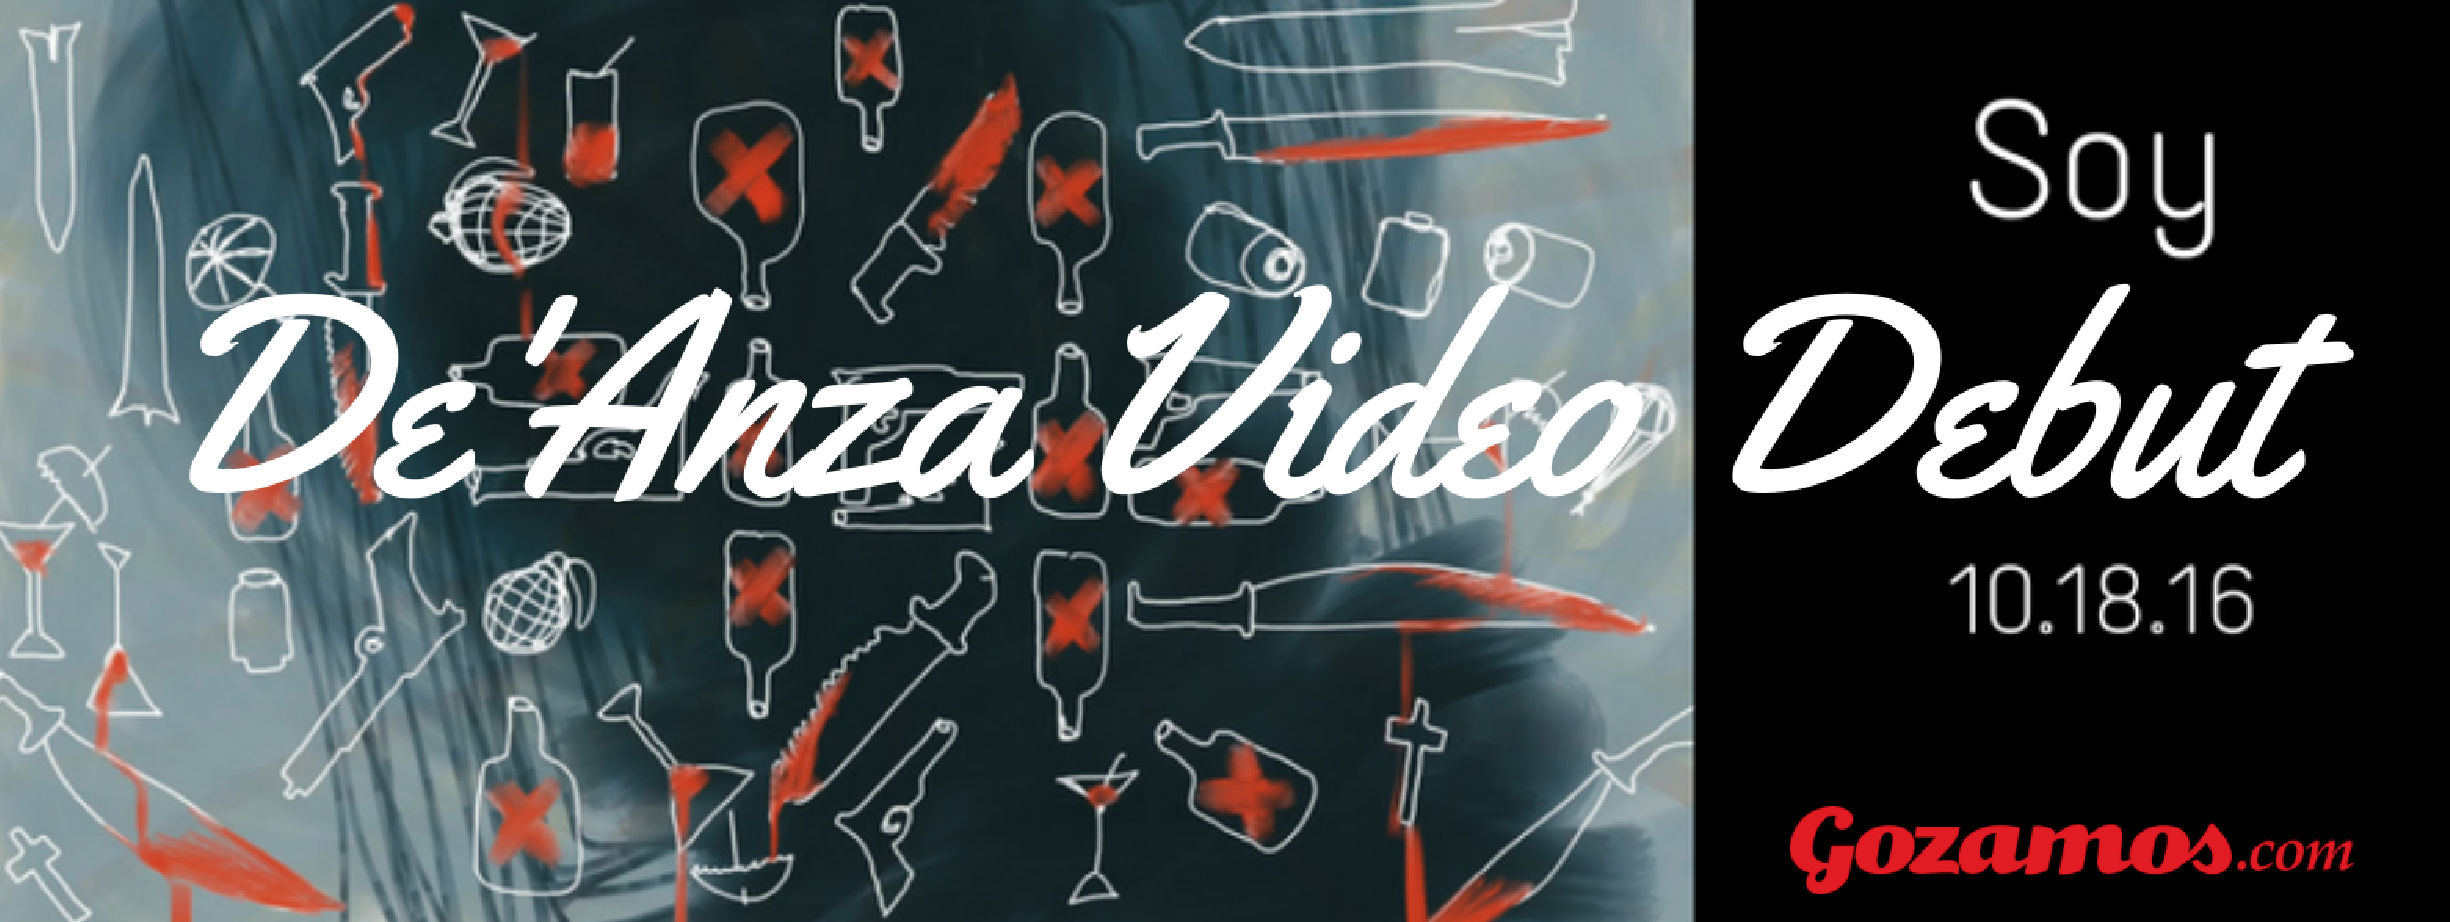 deanza-video-debut